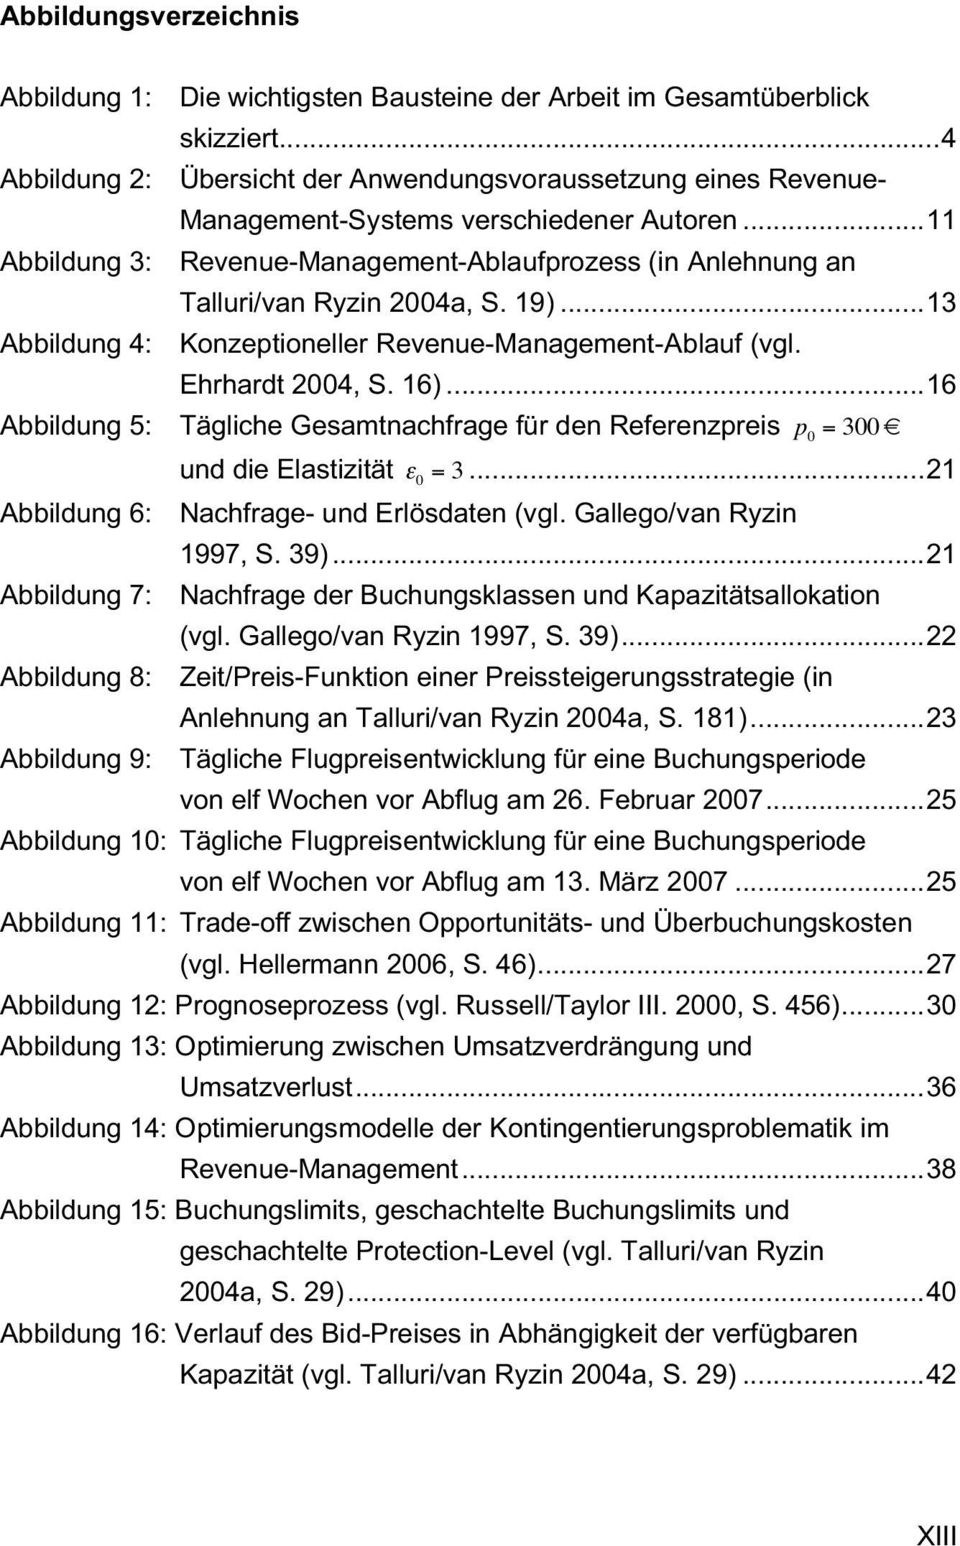 ..11 Abbildung 3: Revenue-Management-Ablaufprozess (in Anlehnung an Talluri/van Ryzin 2004a, S. 19)...13 Abbildung 4: Konzeptioneller Revenue-Management-Ablauf (vgl. Ehrhardt 2004, S. 16).